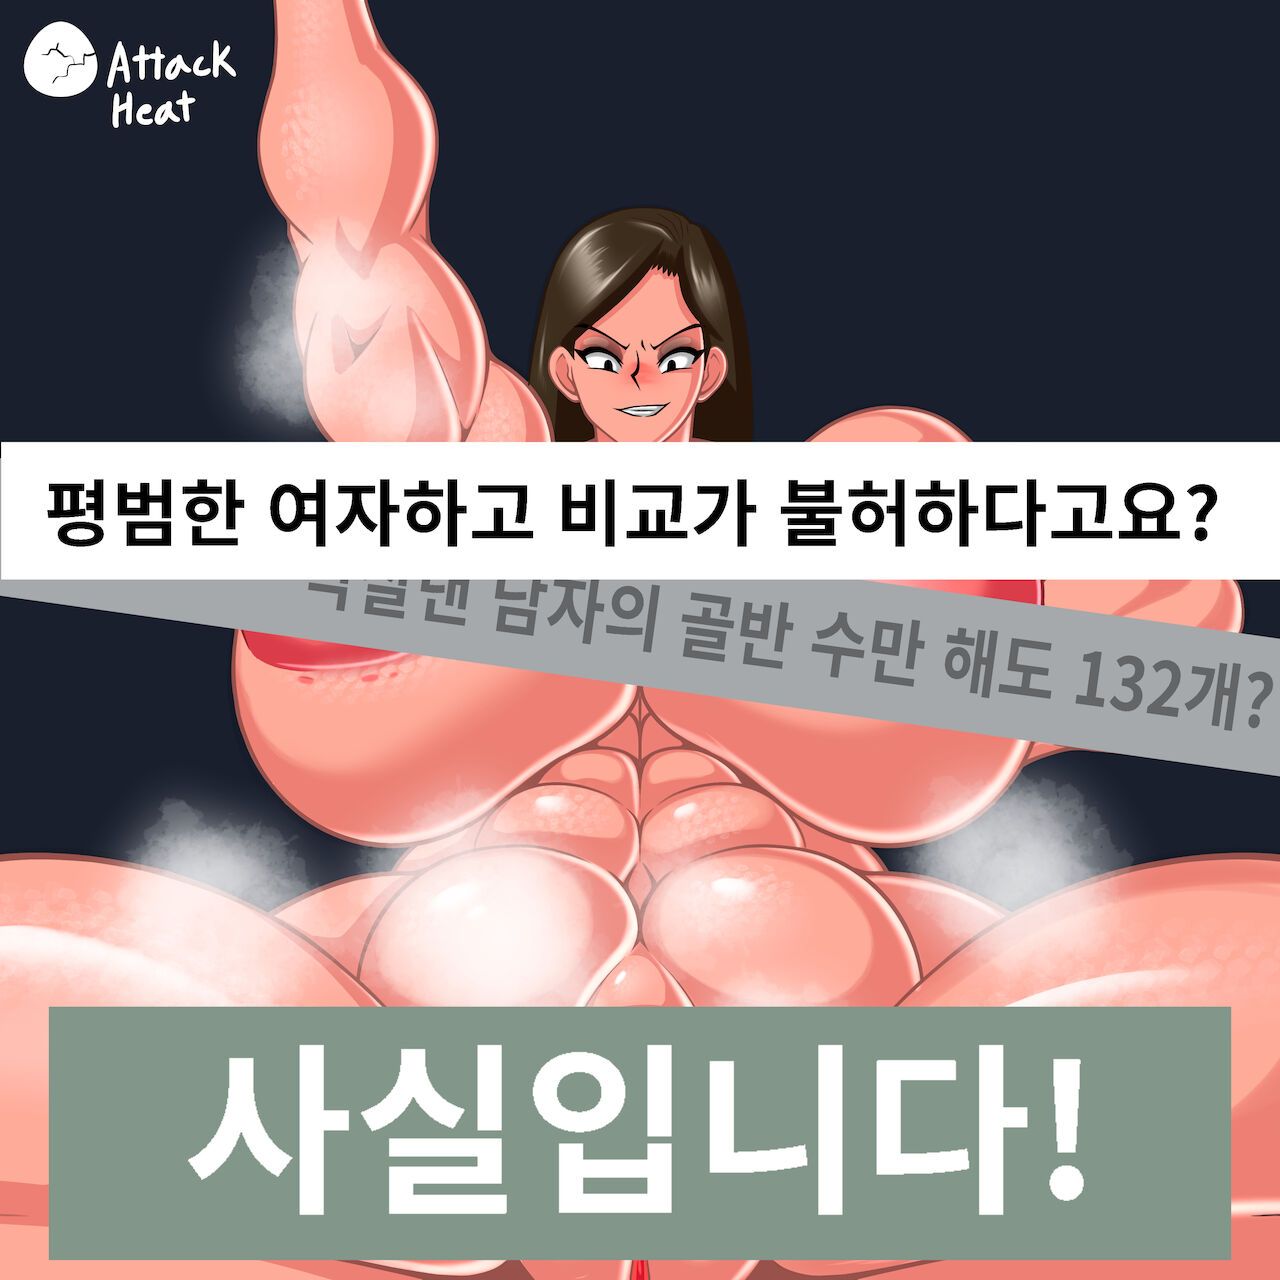 Dot eyes, It's NOT true!, "That art style" (South Korean propaganda, meme and Satire) 점눈깔, 사실이 아닙니다!, 해명이, "그 그림체" 28